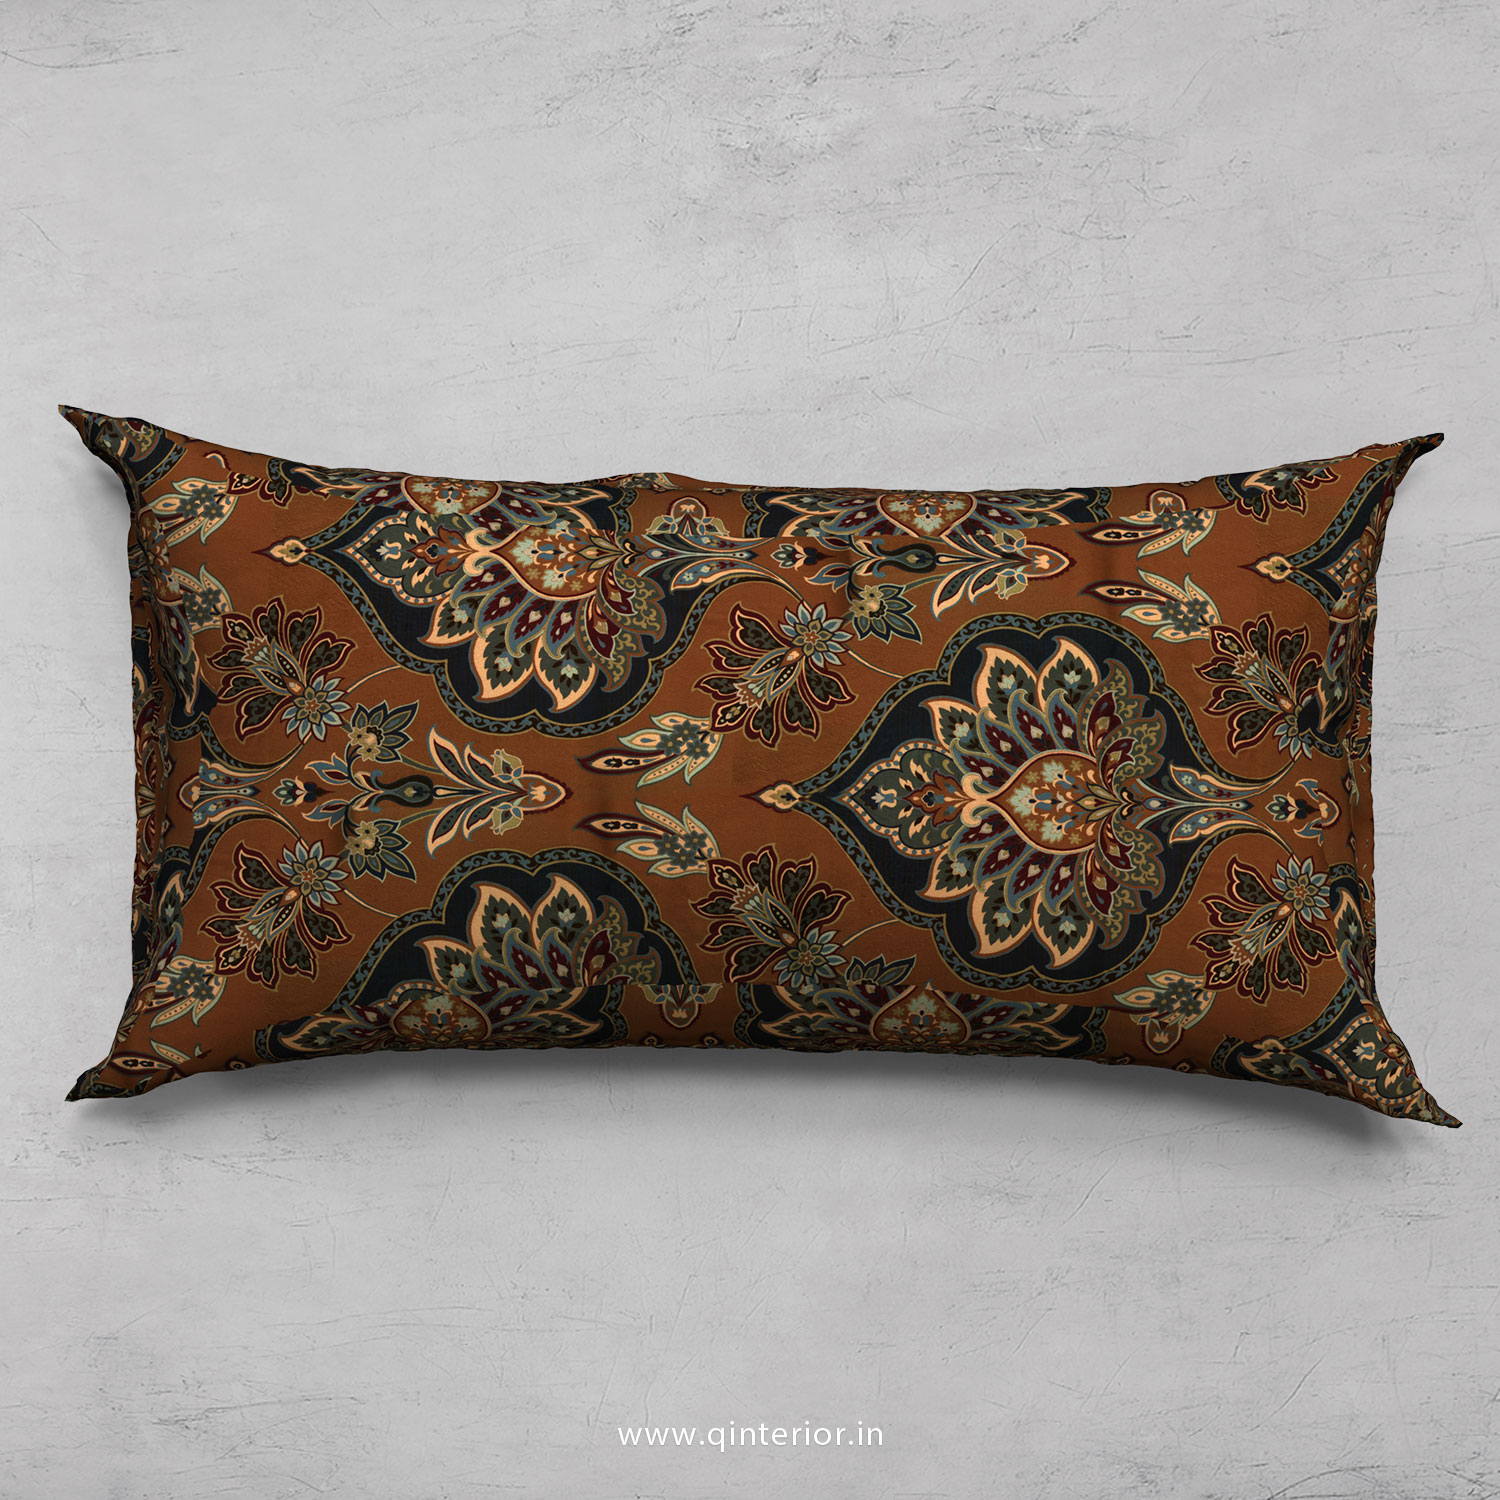 Cushion With Cushion Cover in Royal Velvet- CUS002 RV03